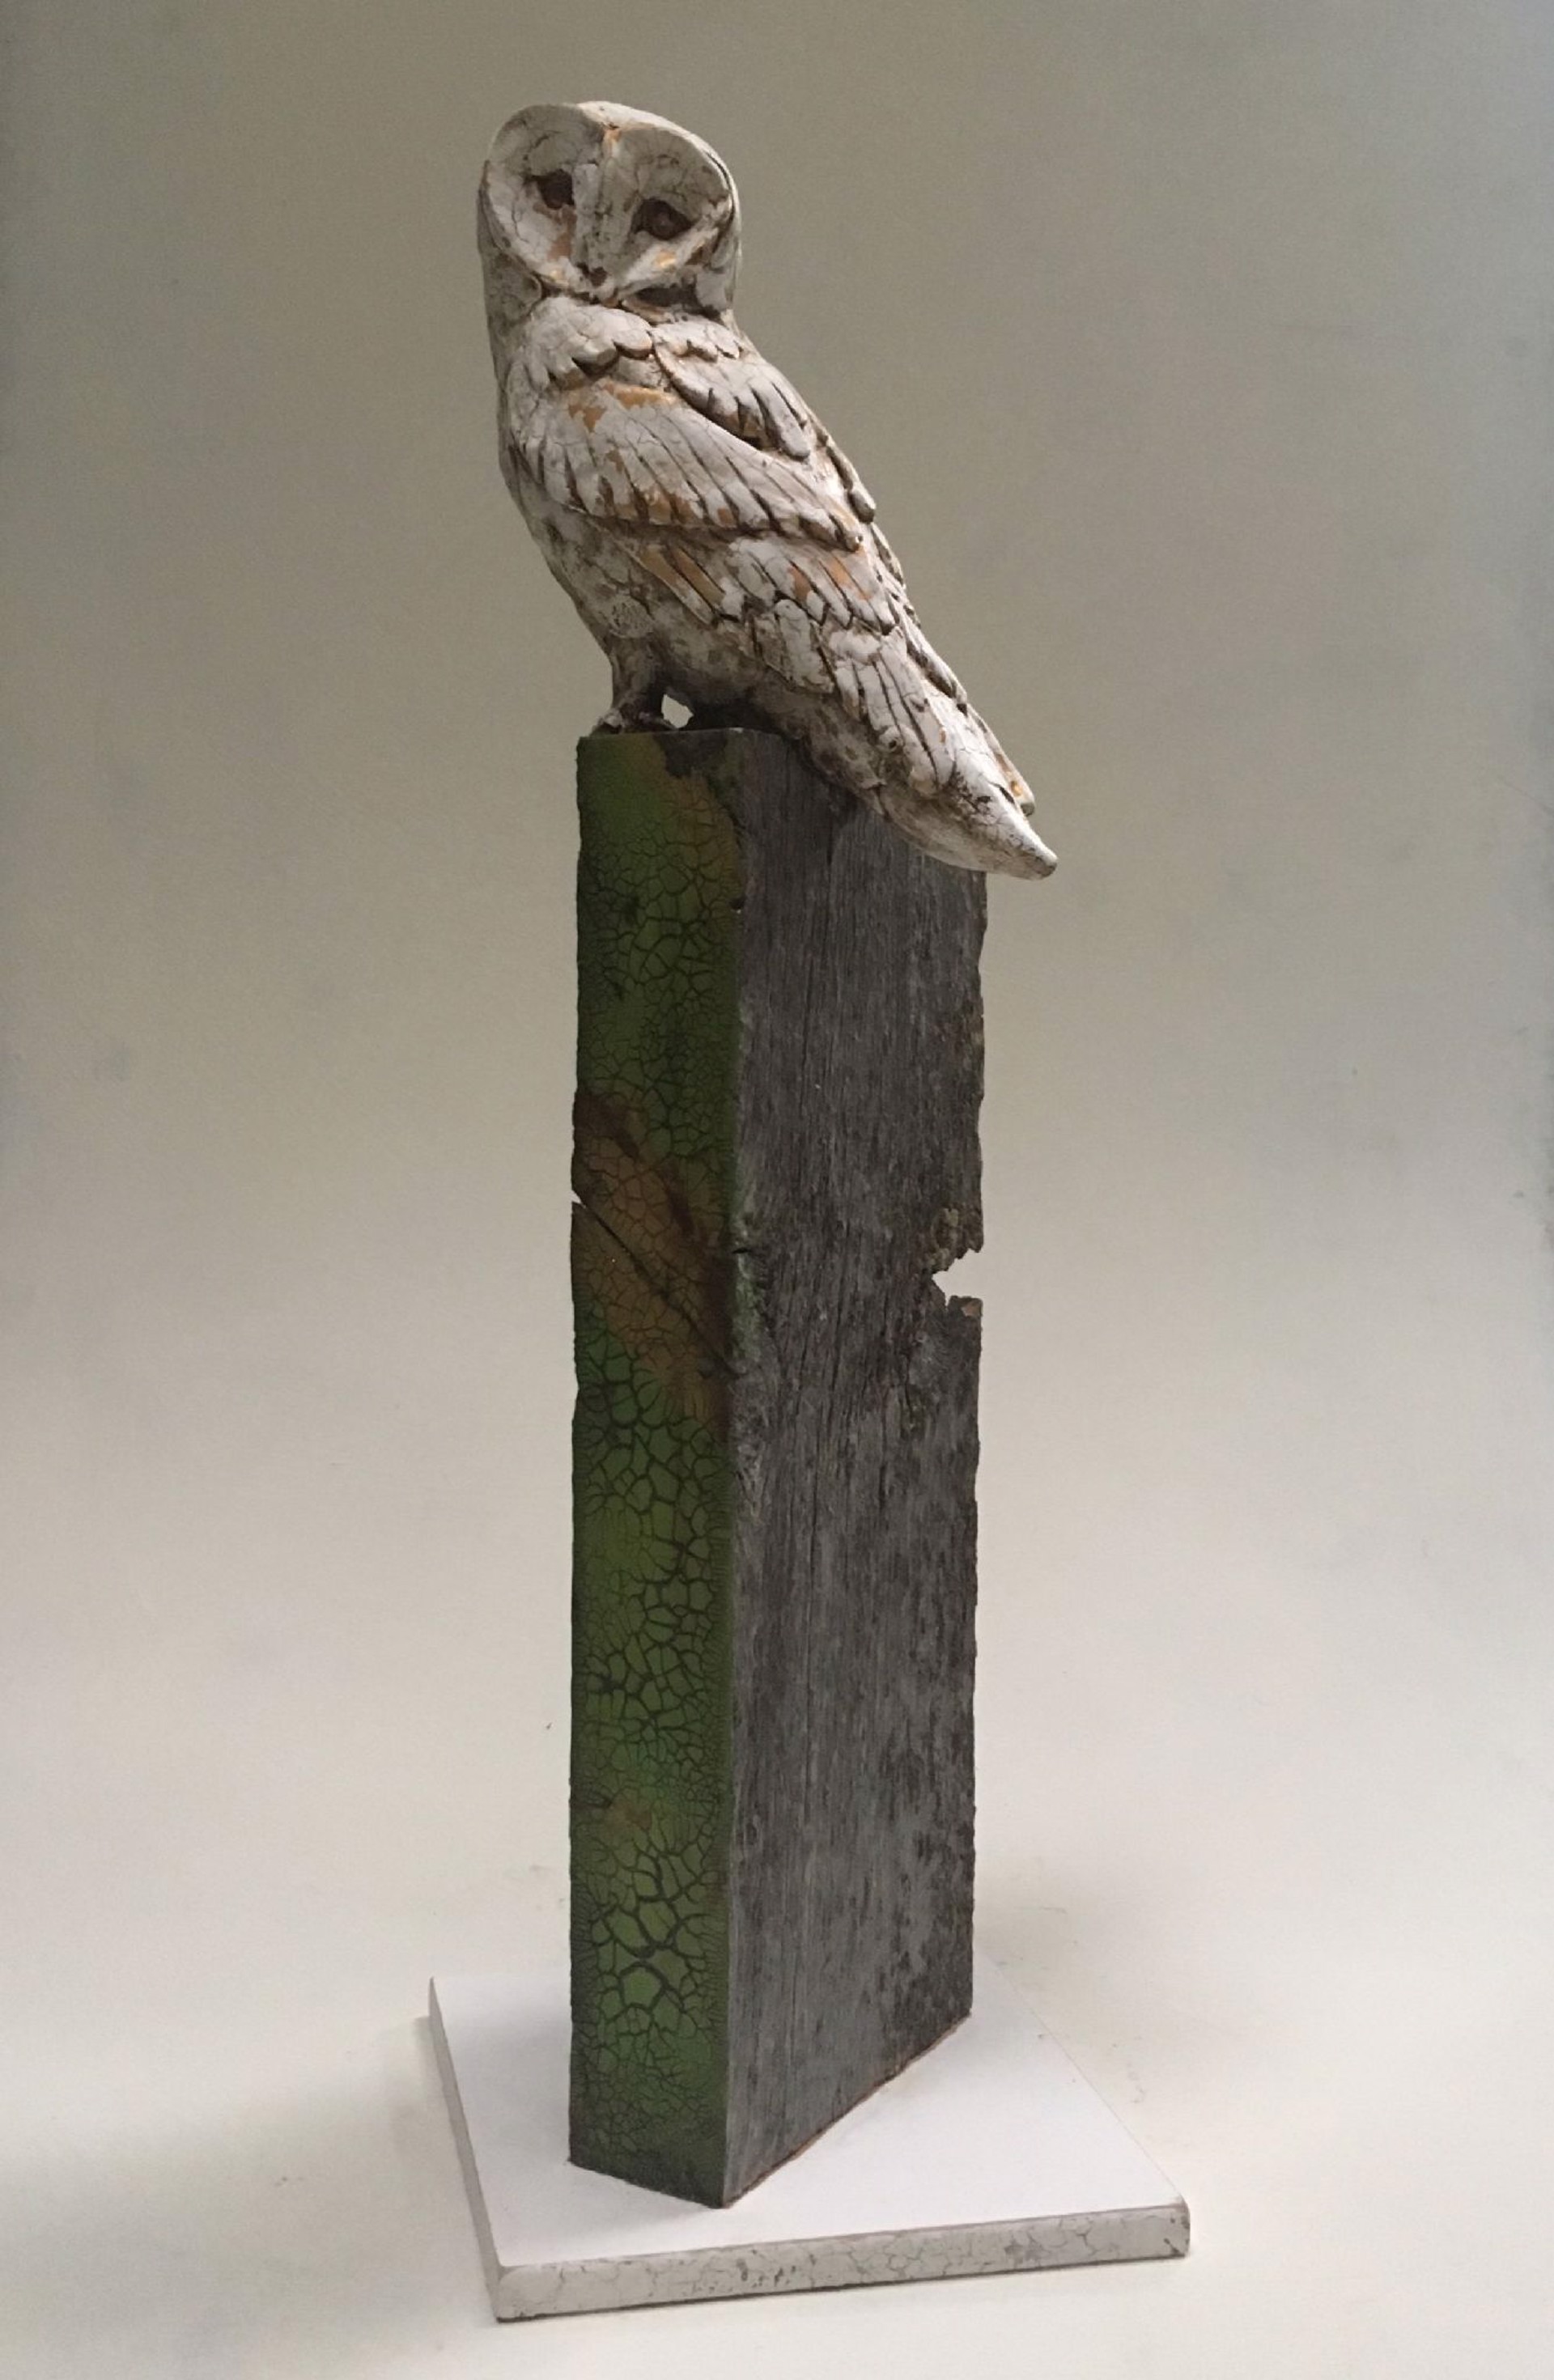 Barn Owl by Chris Reilly